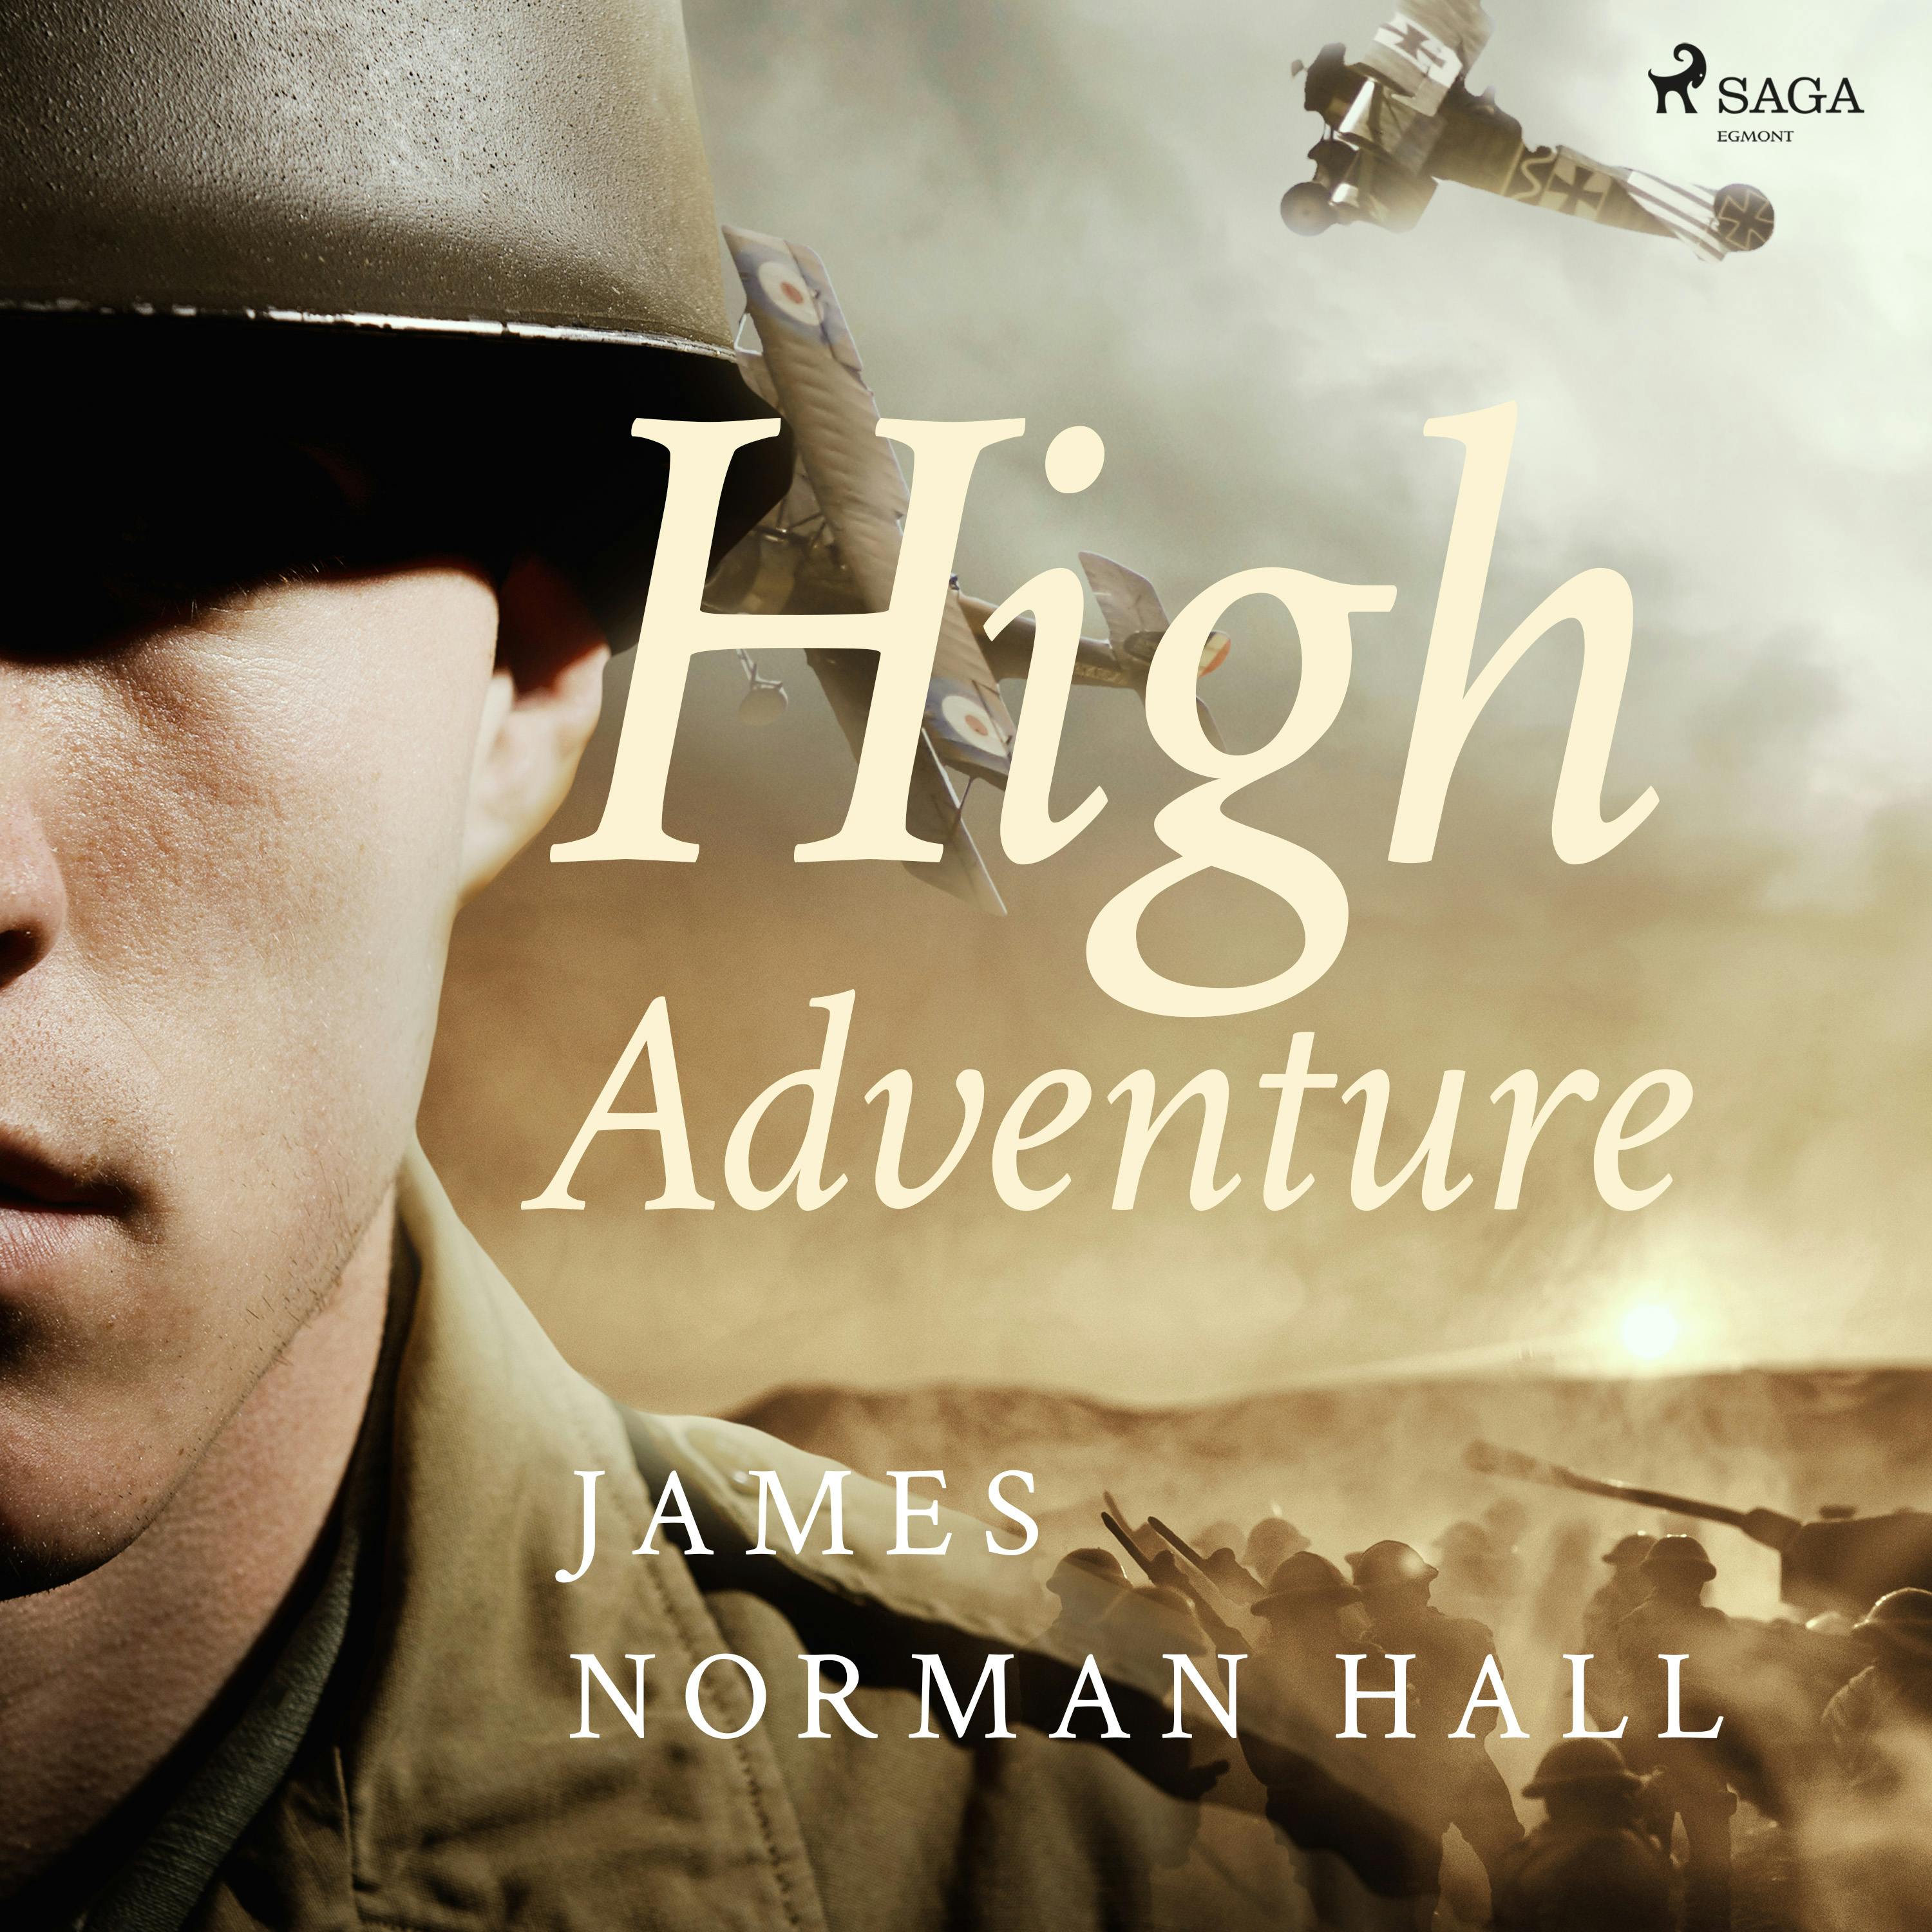 High Adventure - James Norman Hall